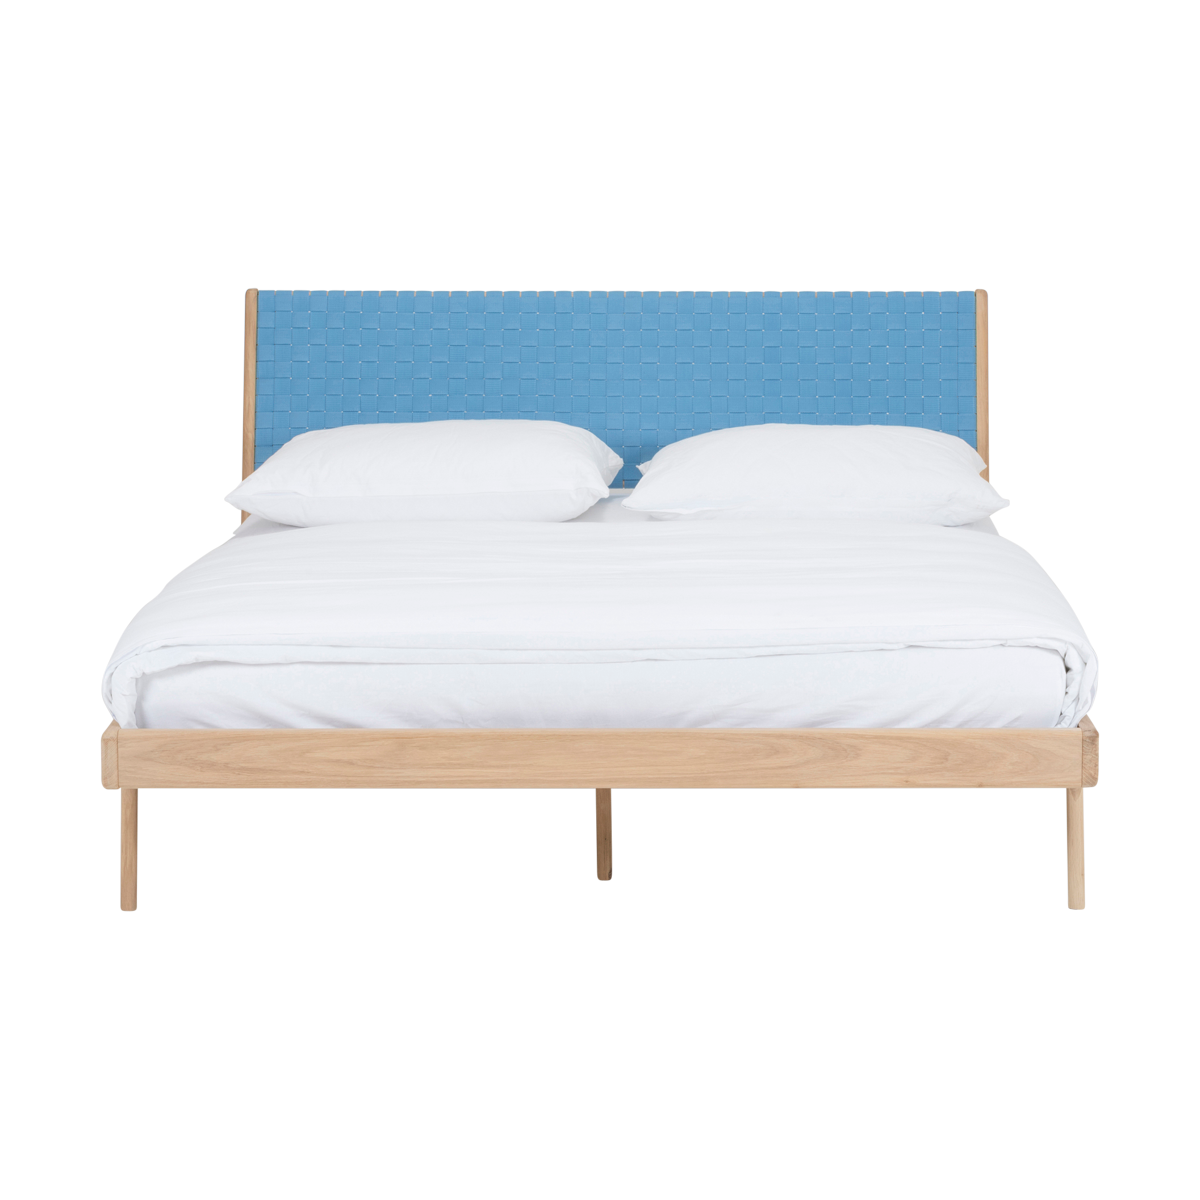 Fawn bed deep frame - Houten bed whitewash met cotton webbing blue 4581 - 180 x 200